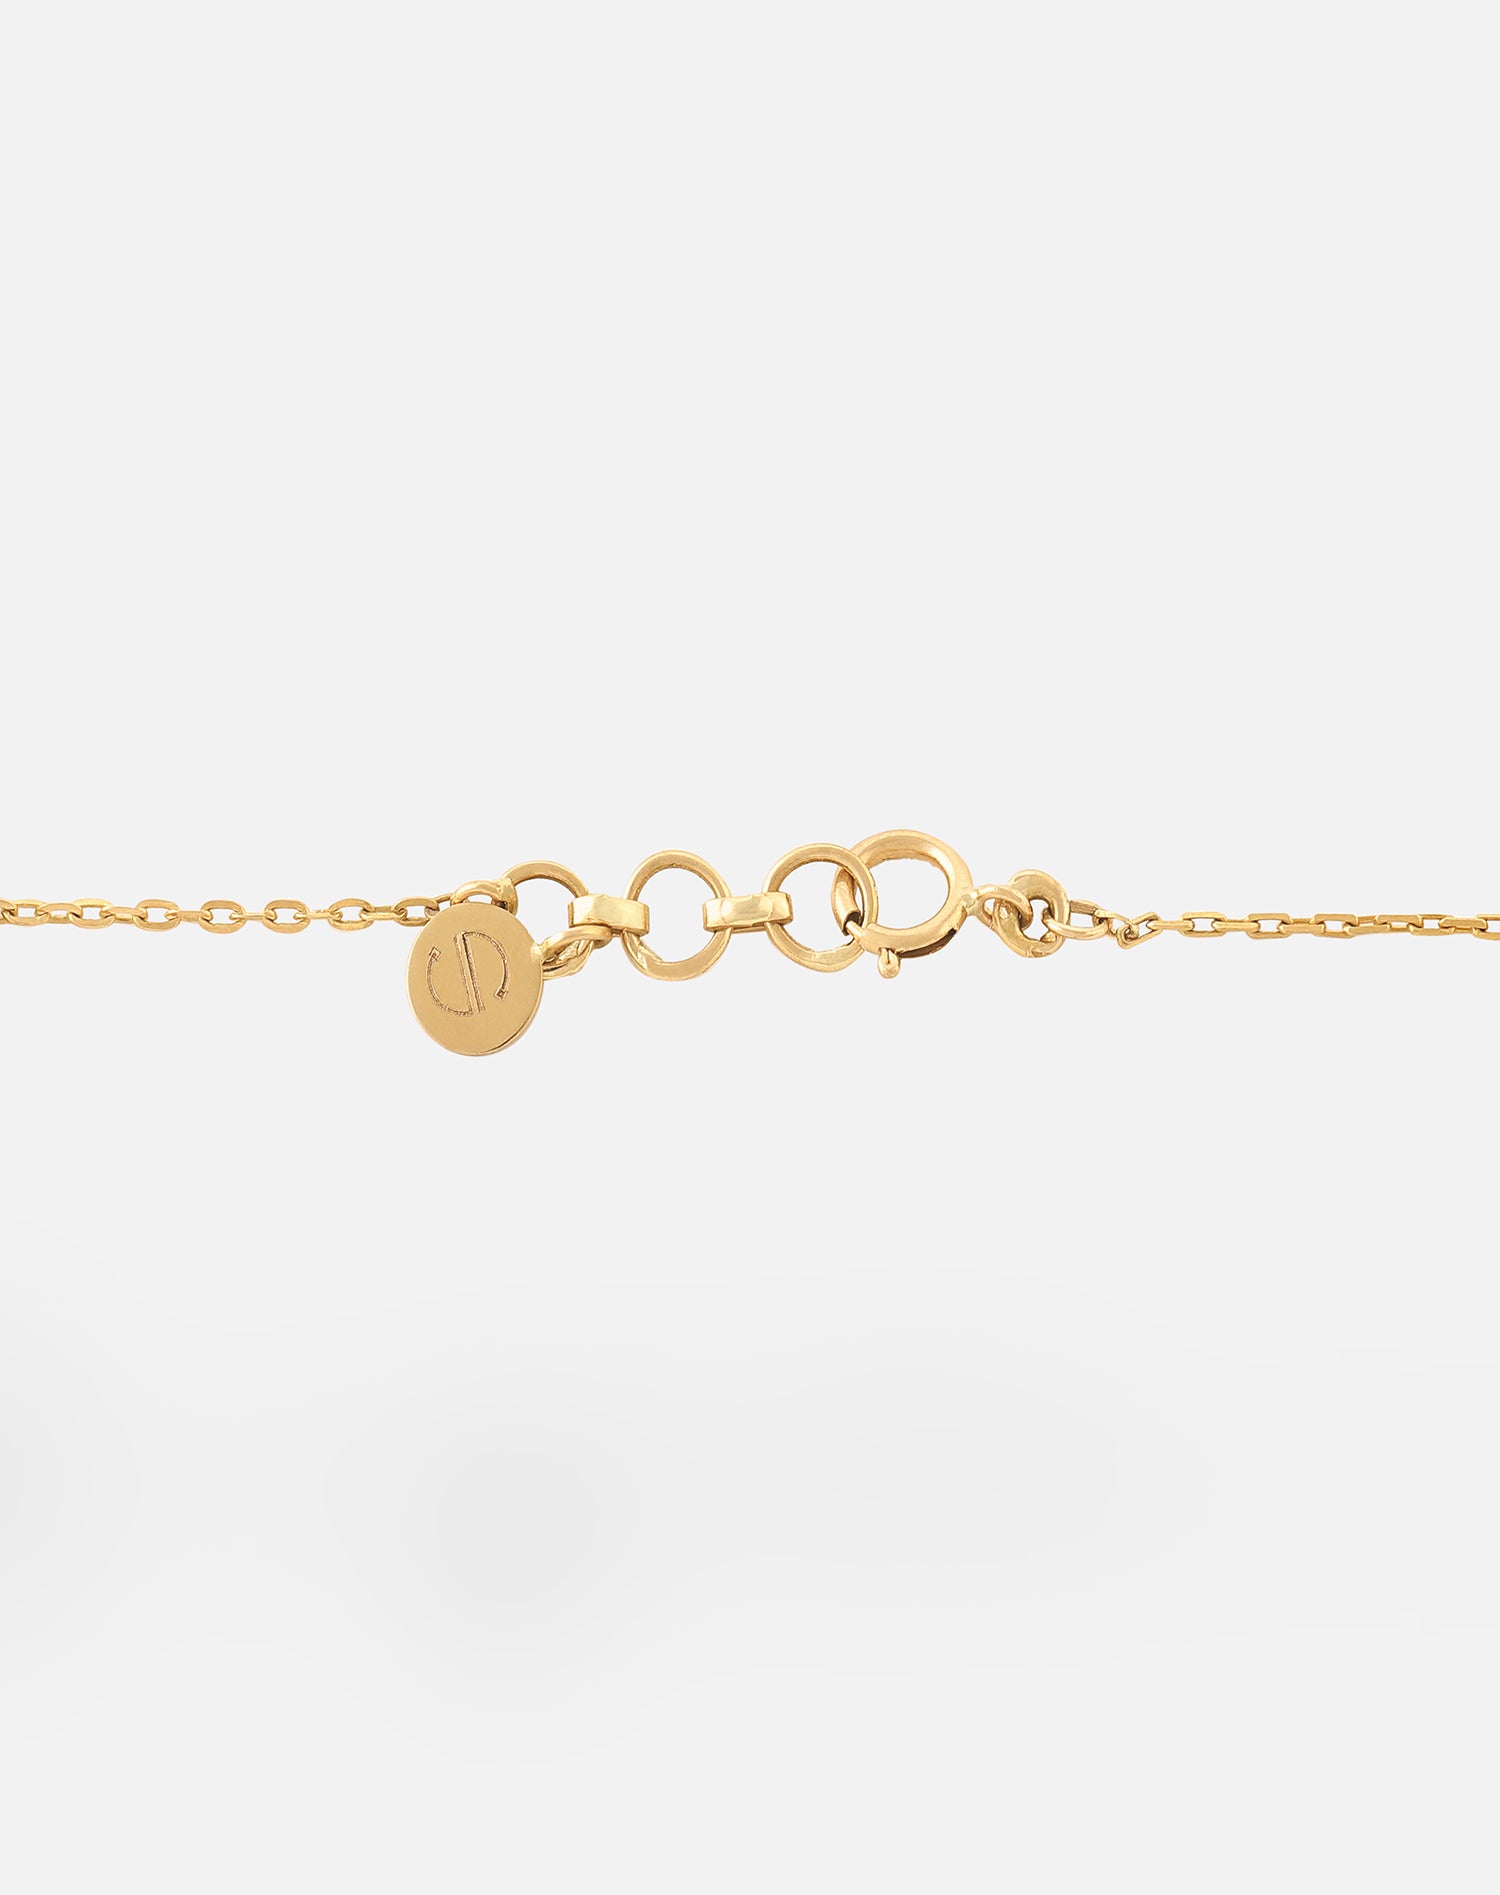 Organic Small Link Bracelet in 18k gold – Rona Fisher Jewelry